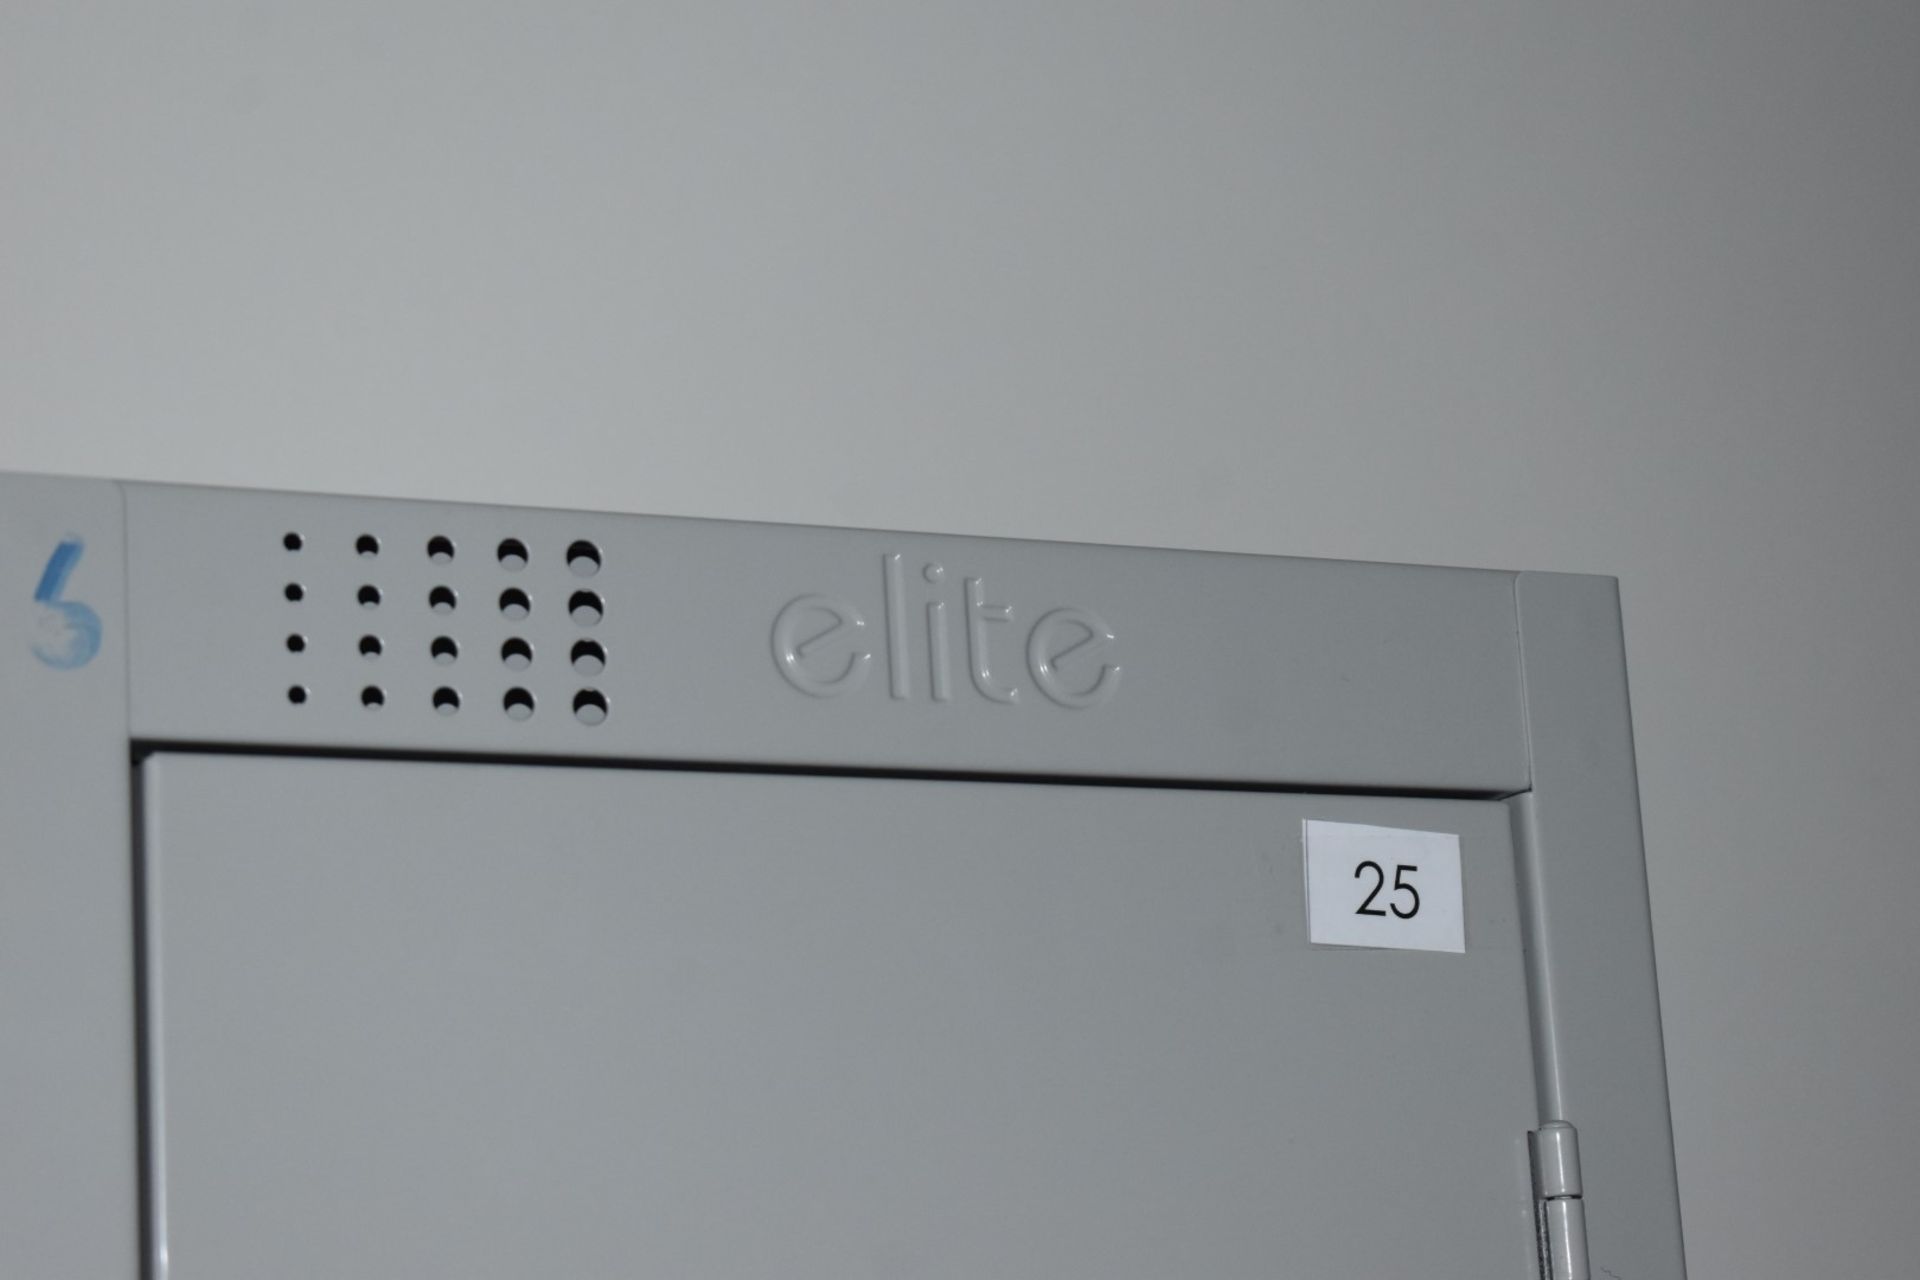 1 x Elite Four Door Staff Locker Without Keys - Includes Waste Bin - Ref: FF147 U - CL544 - - Image 3 of 3